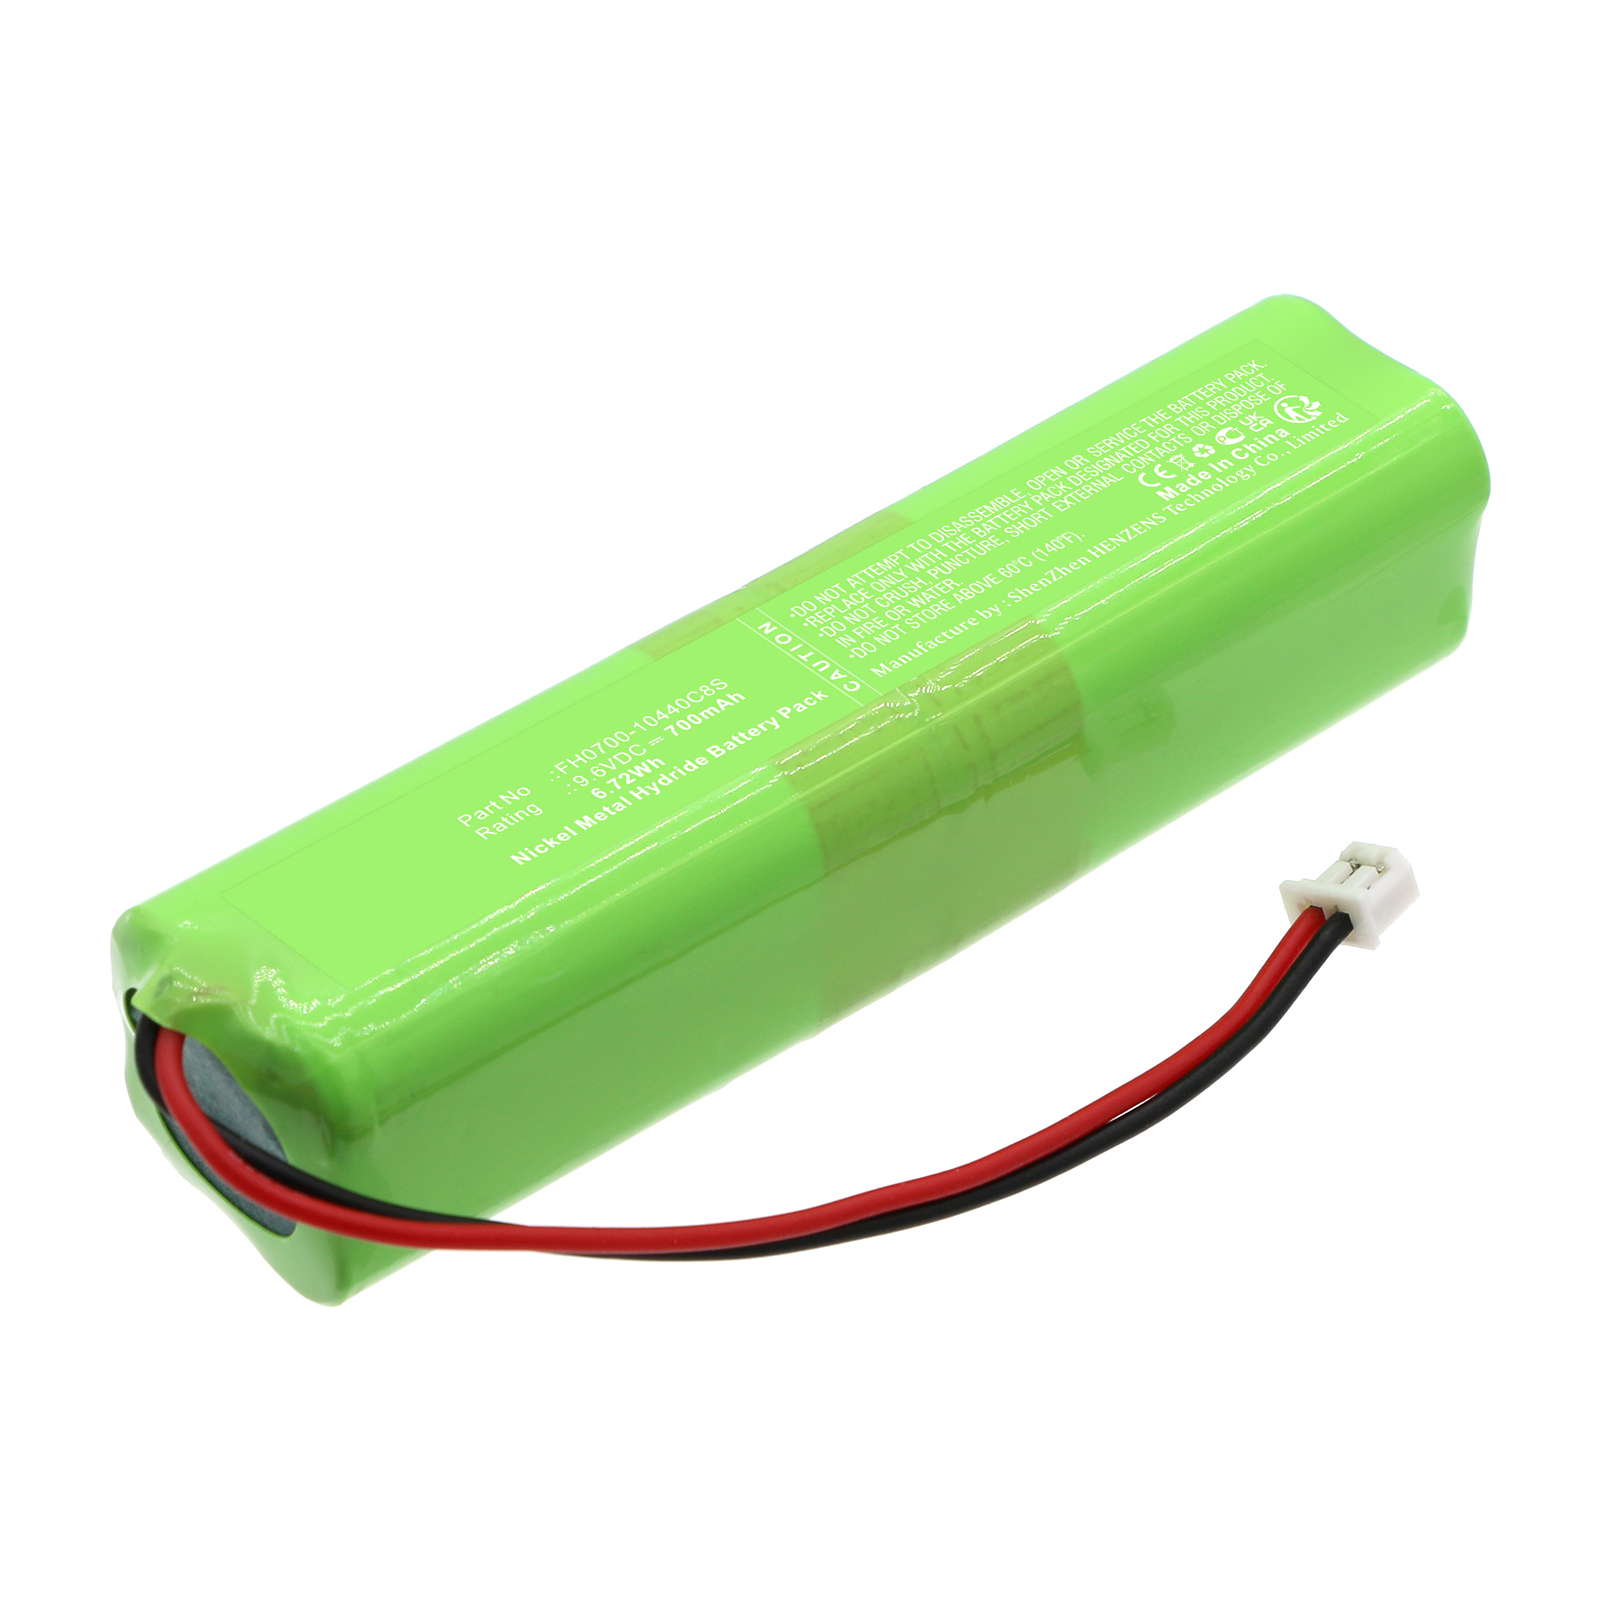 Synergy Digital Alarm System Battery, Compatible with LifeSOS FH0700-10440C8S Alarm System Battery (Ni-MH, 9.6V, 700mAh)